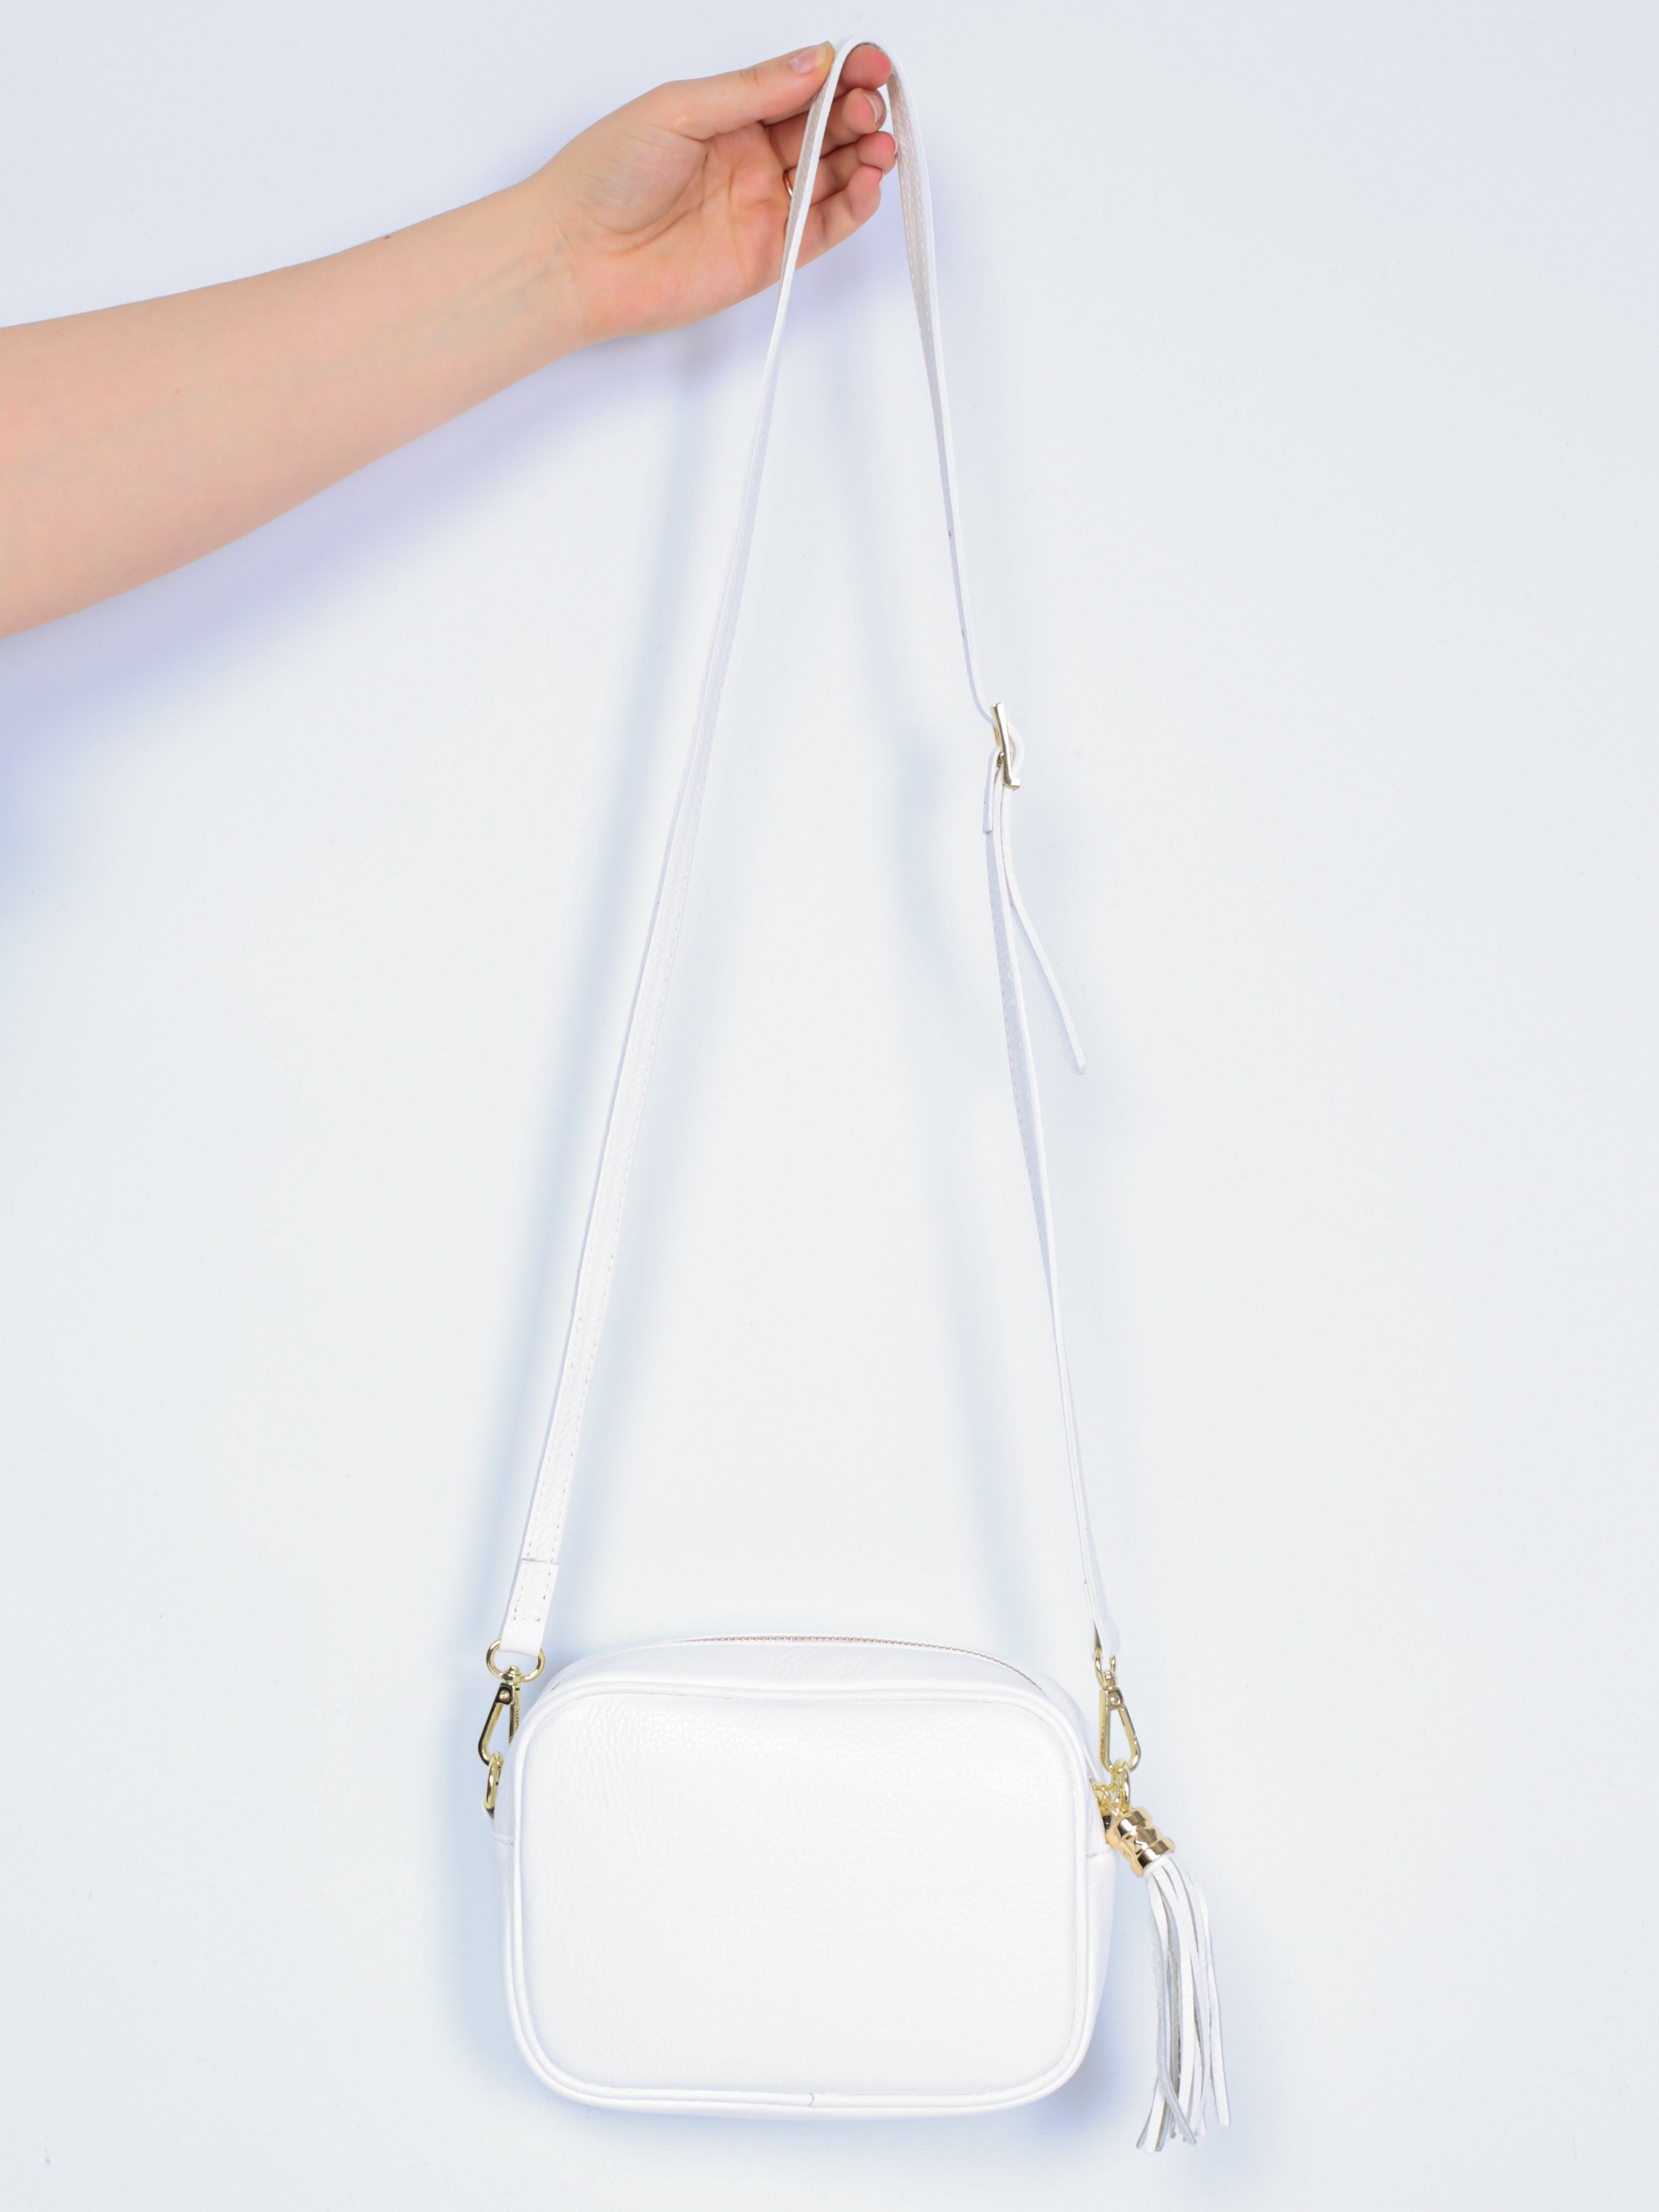 Leather bag with fringe pendant